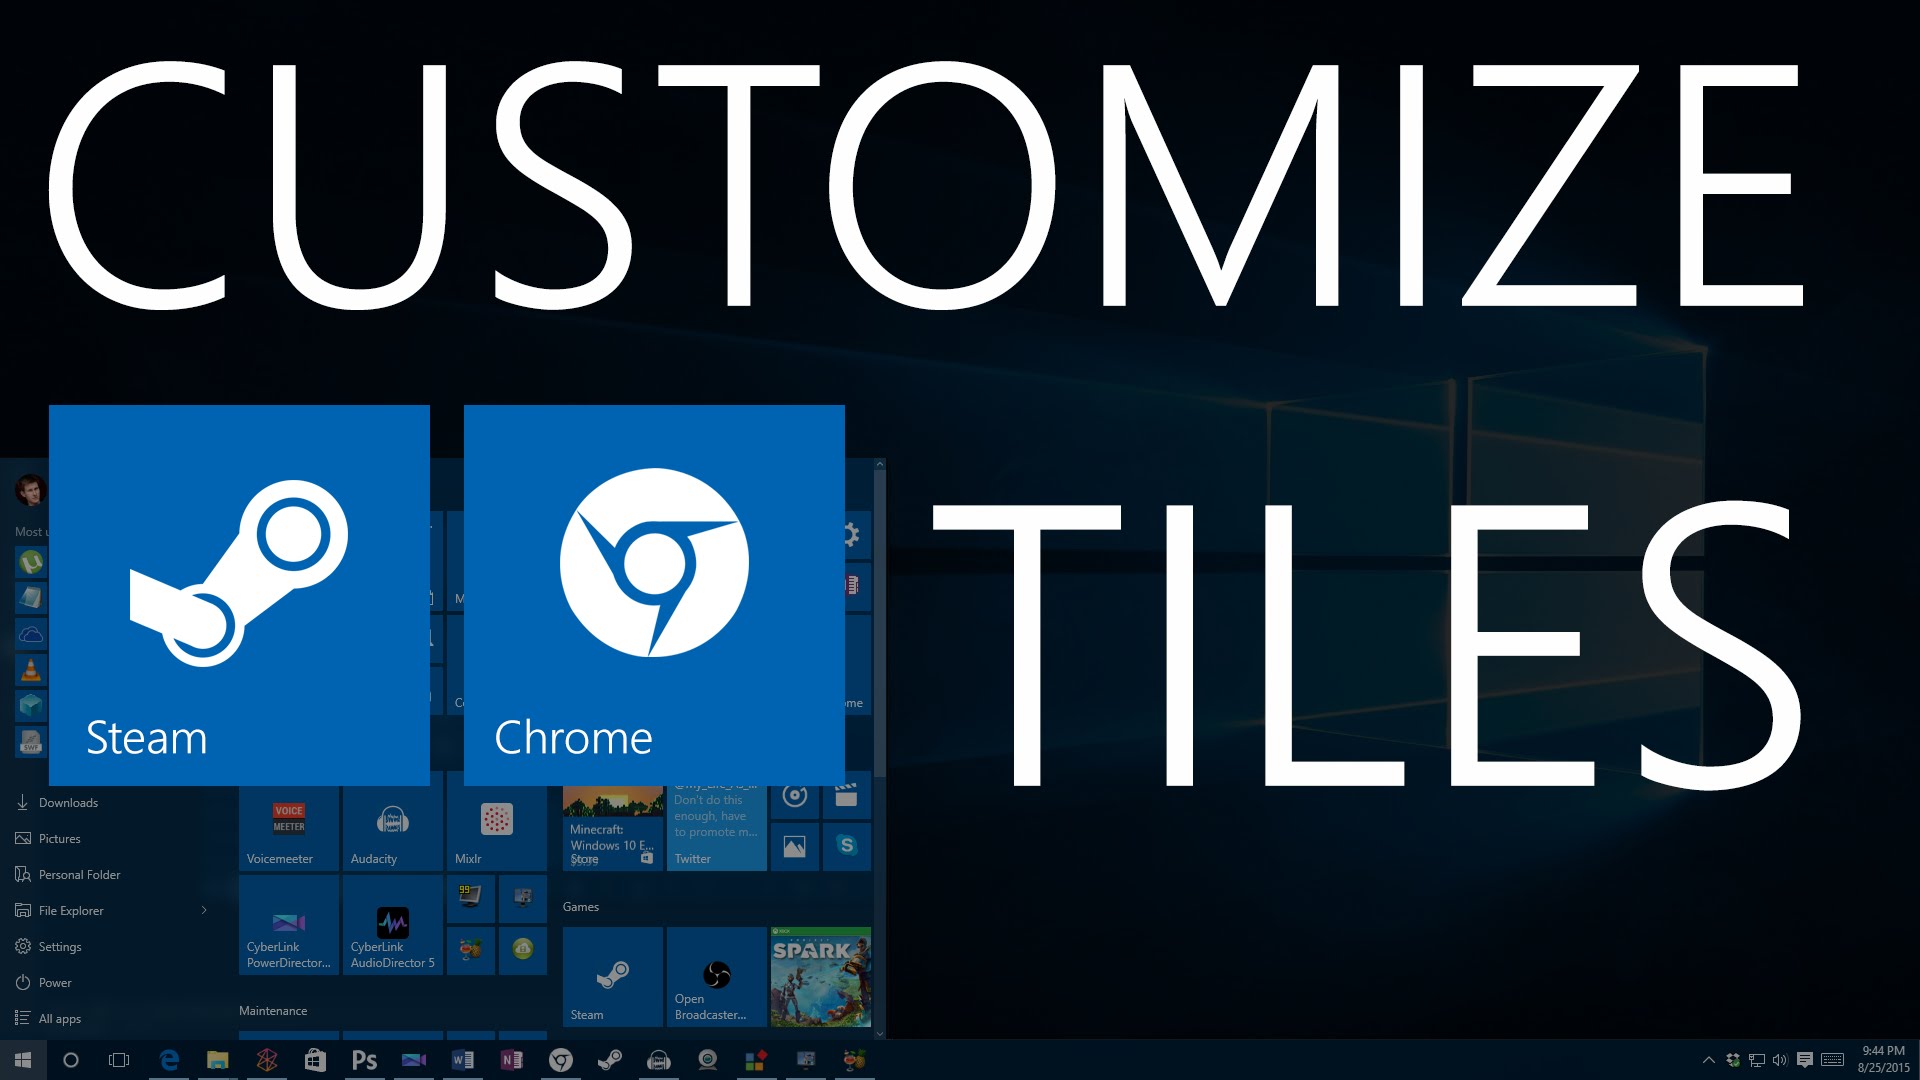 Customize Windows 8 Metro Tile Icons With OblyTile - Hongkiat